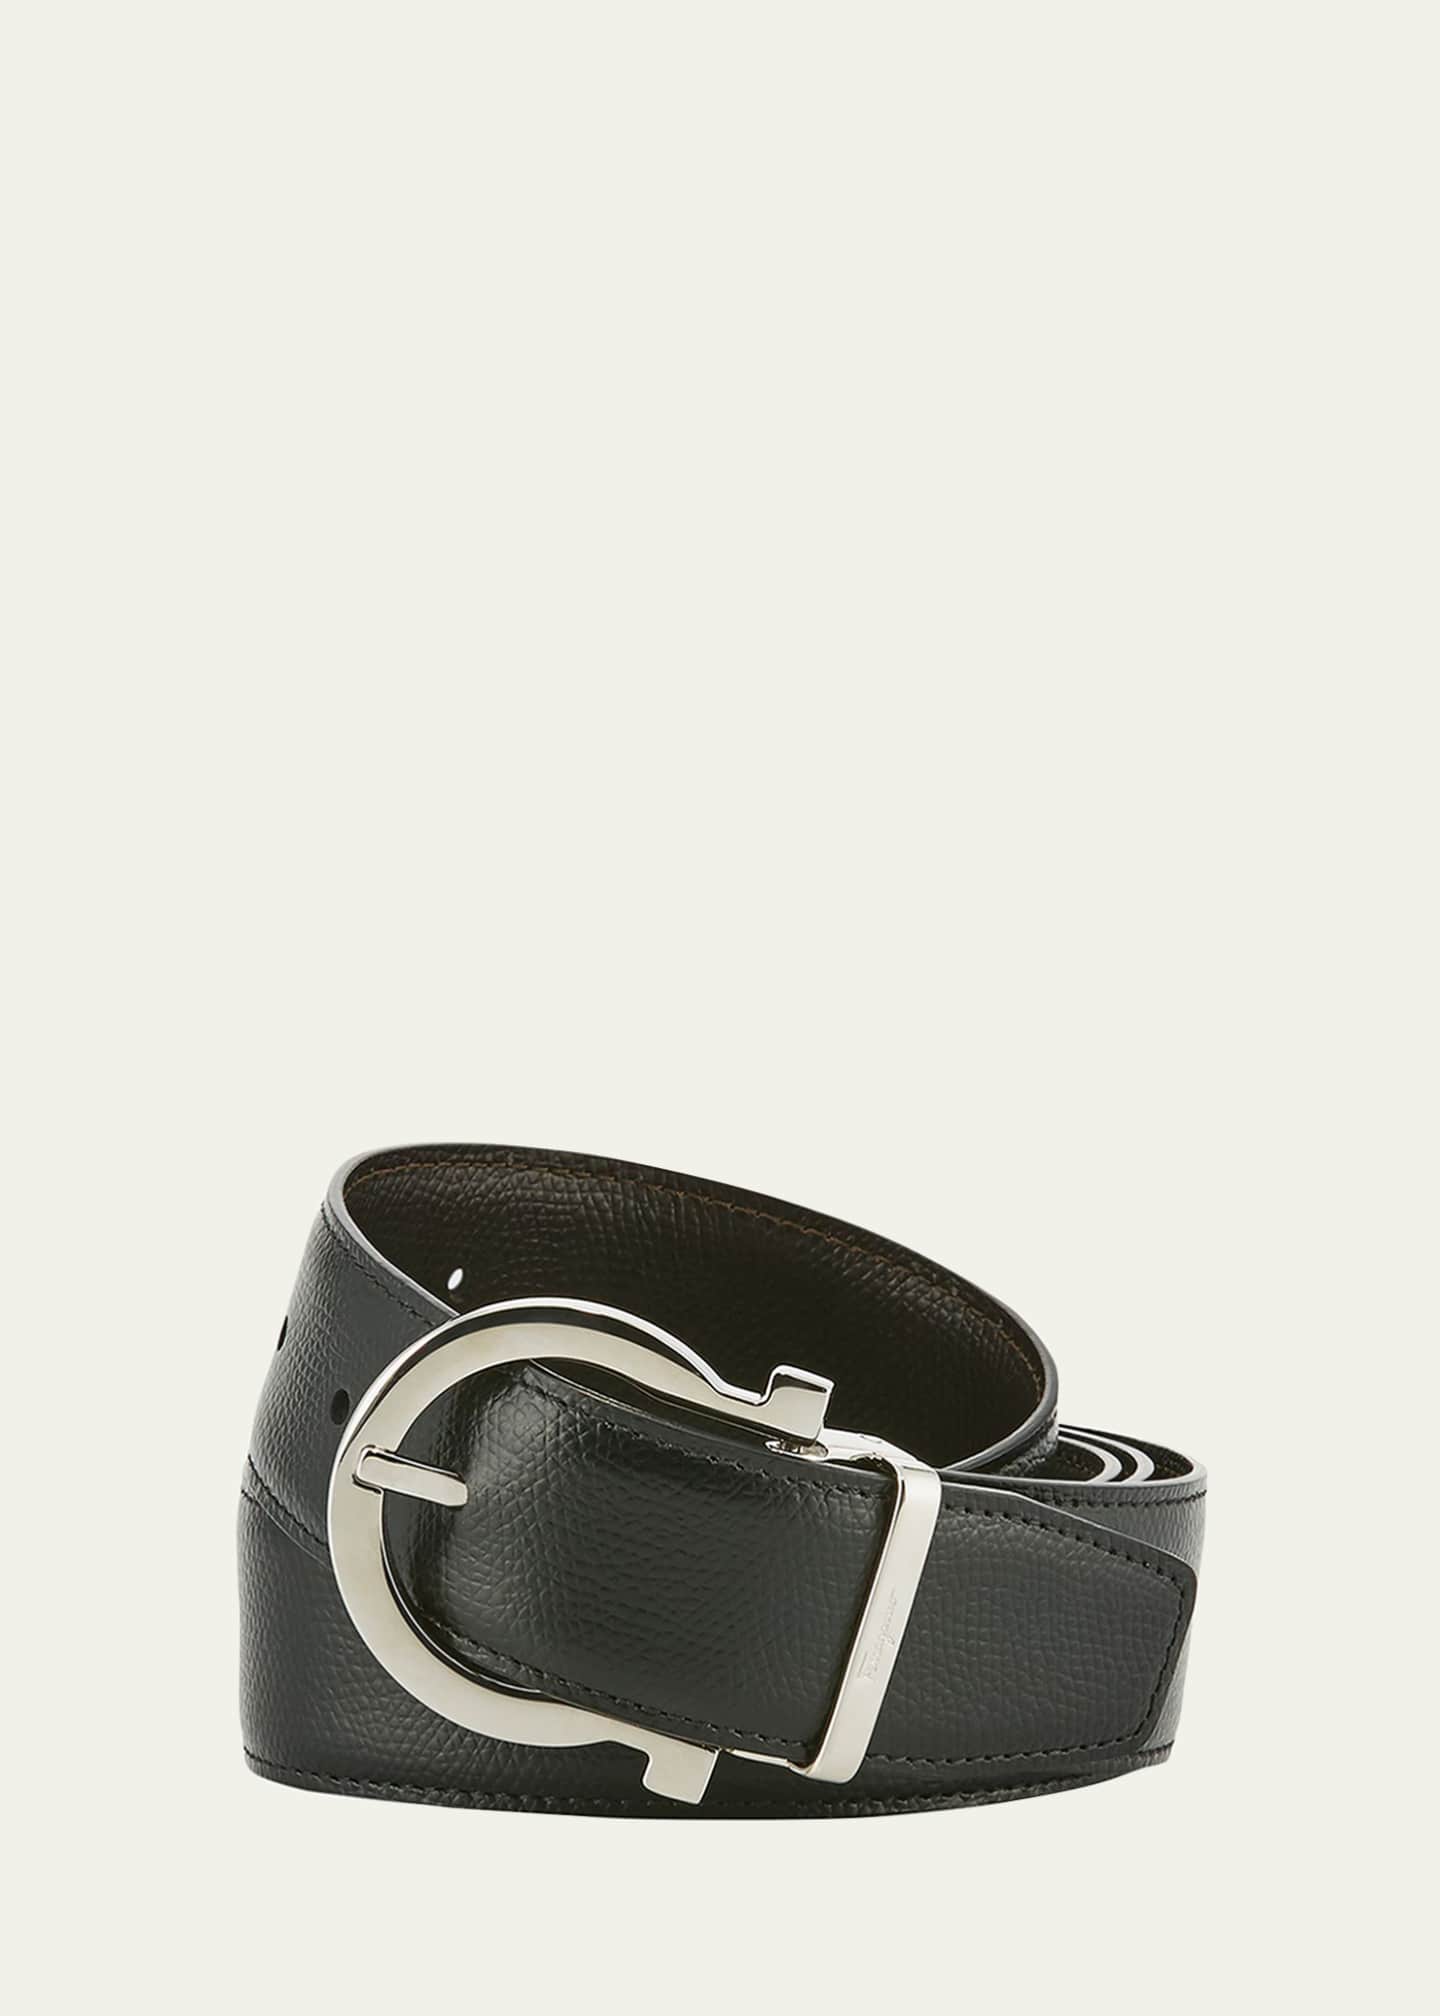 Salvatore Ferragamo Men's Reversible Leather Belt - 40 / Black/Brown